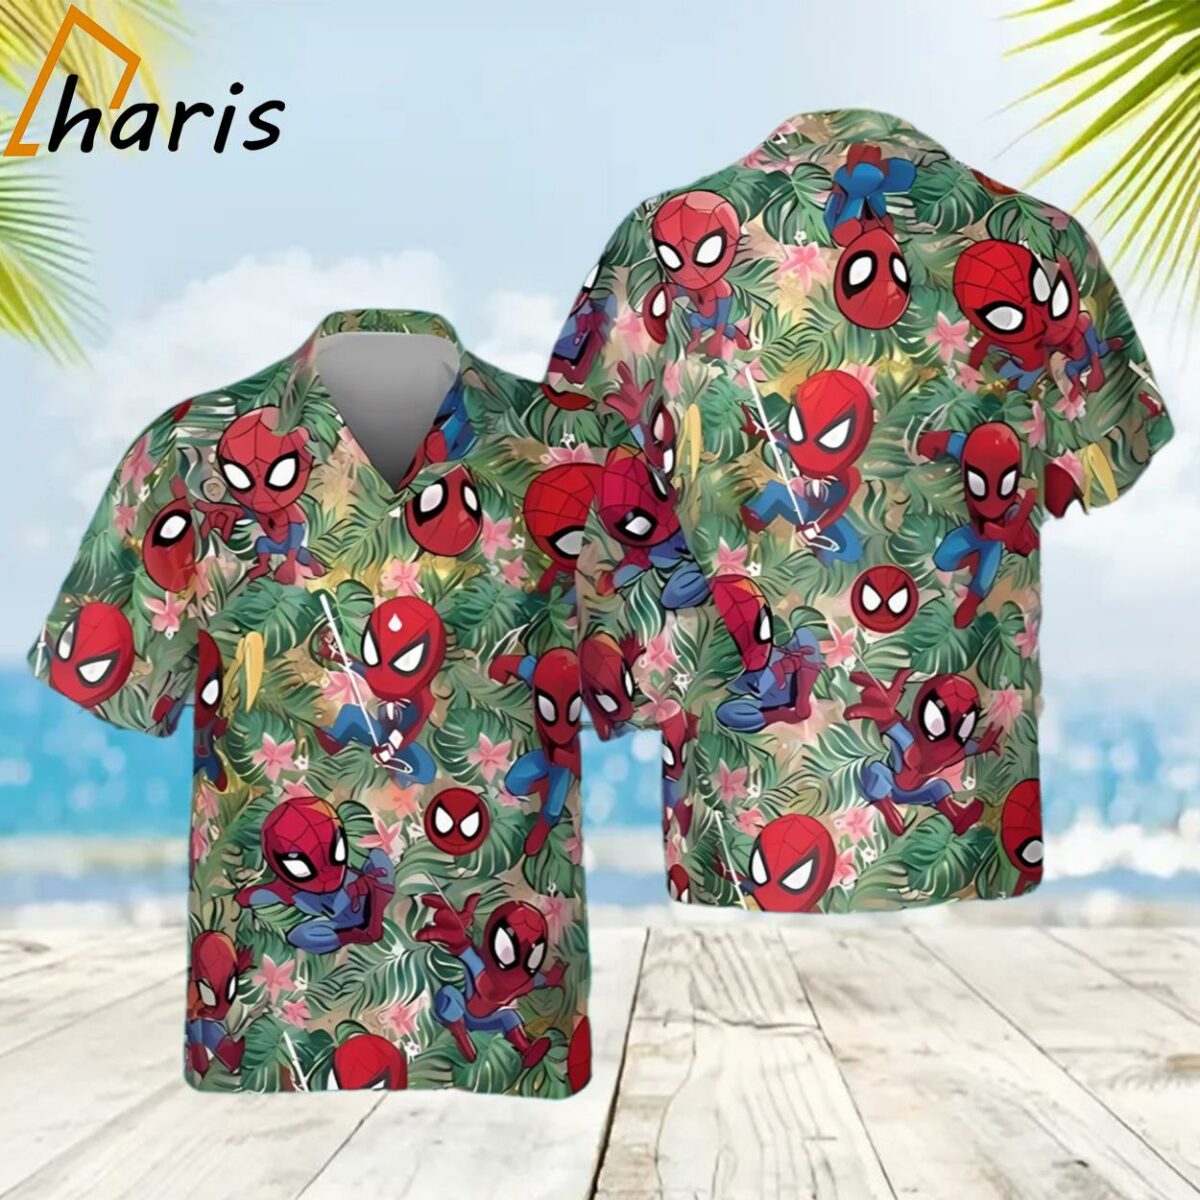 Cute Chibi Spider Man Vacation Best Hawaiian Shirts 2 2